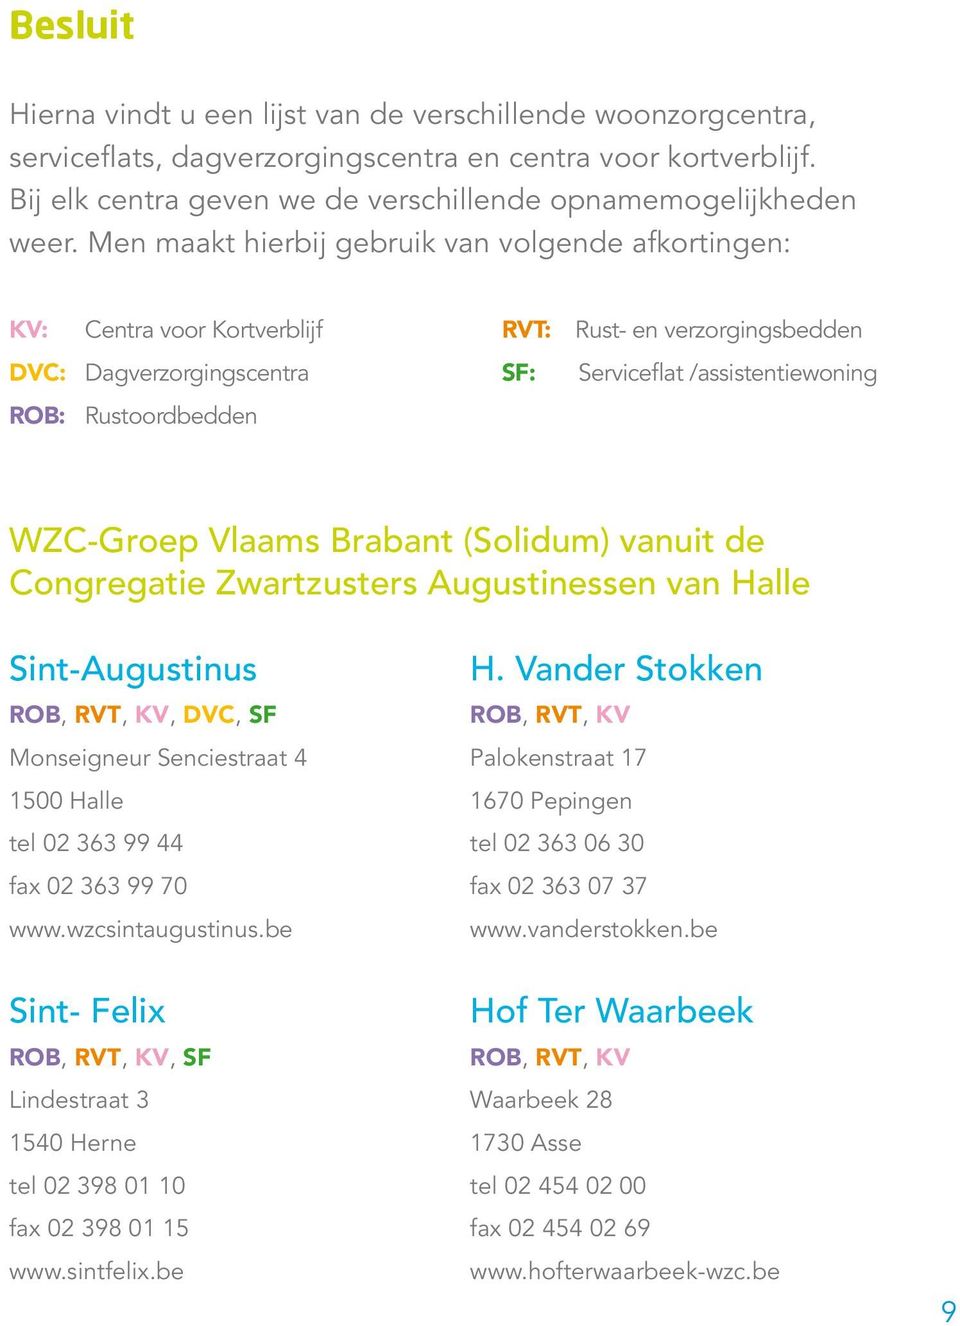 WZC-Groep Vlaams Brabant (Solidum) vanuit de Congregatie Zwartzusters Augustinessen van Halle Sint-Augustinus, KV, DVC, SF Monseigneur Senciestraat 4 1500 Halle tel 02 363 99 44 fax 02 363 99 70 www.